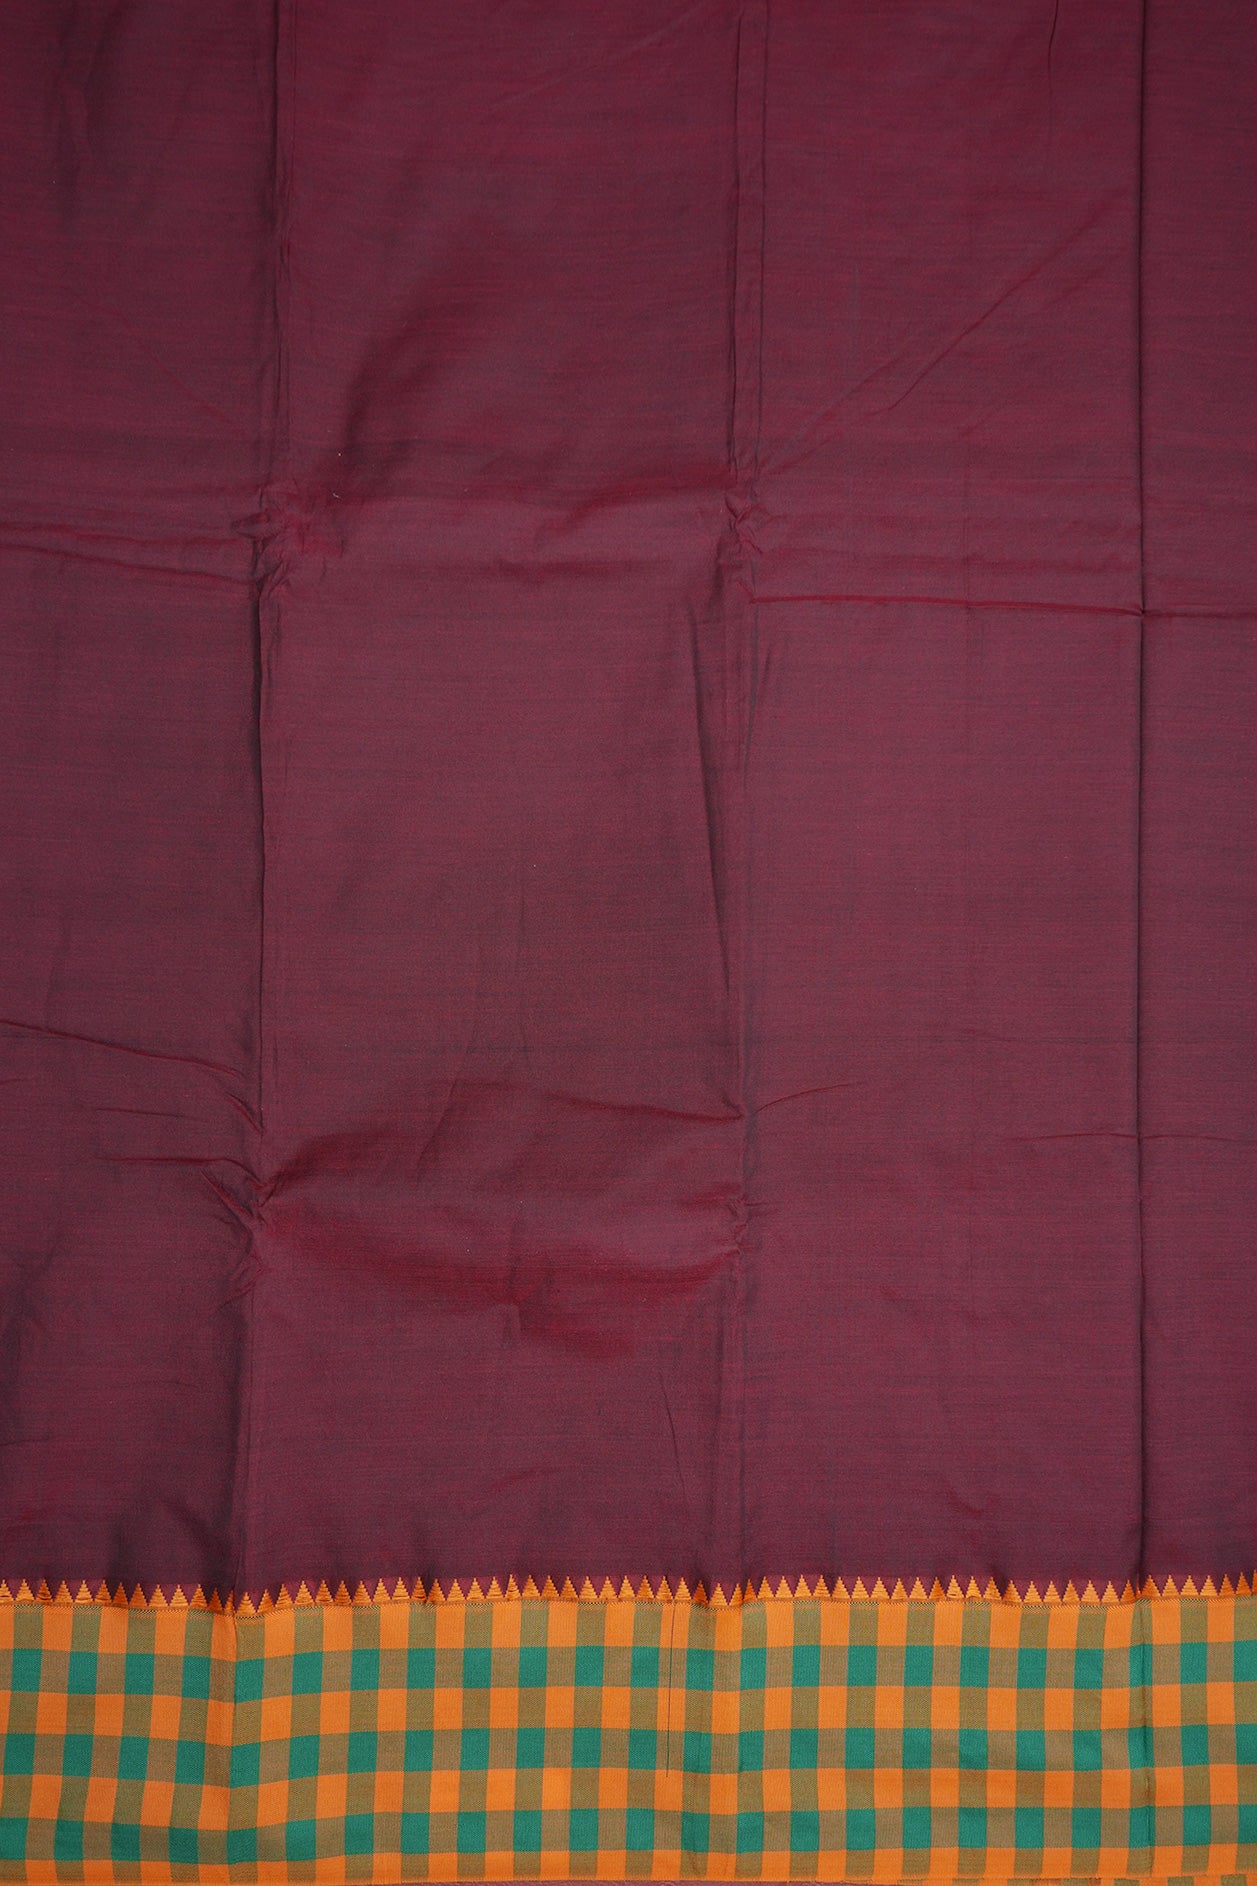 Contrast Checked Threadwork Border With Plain Burgundy Dharwad Cotton Saree